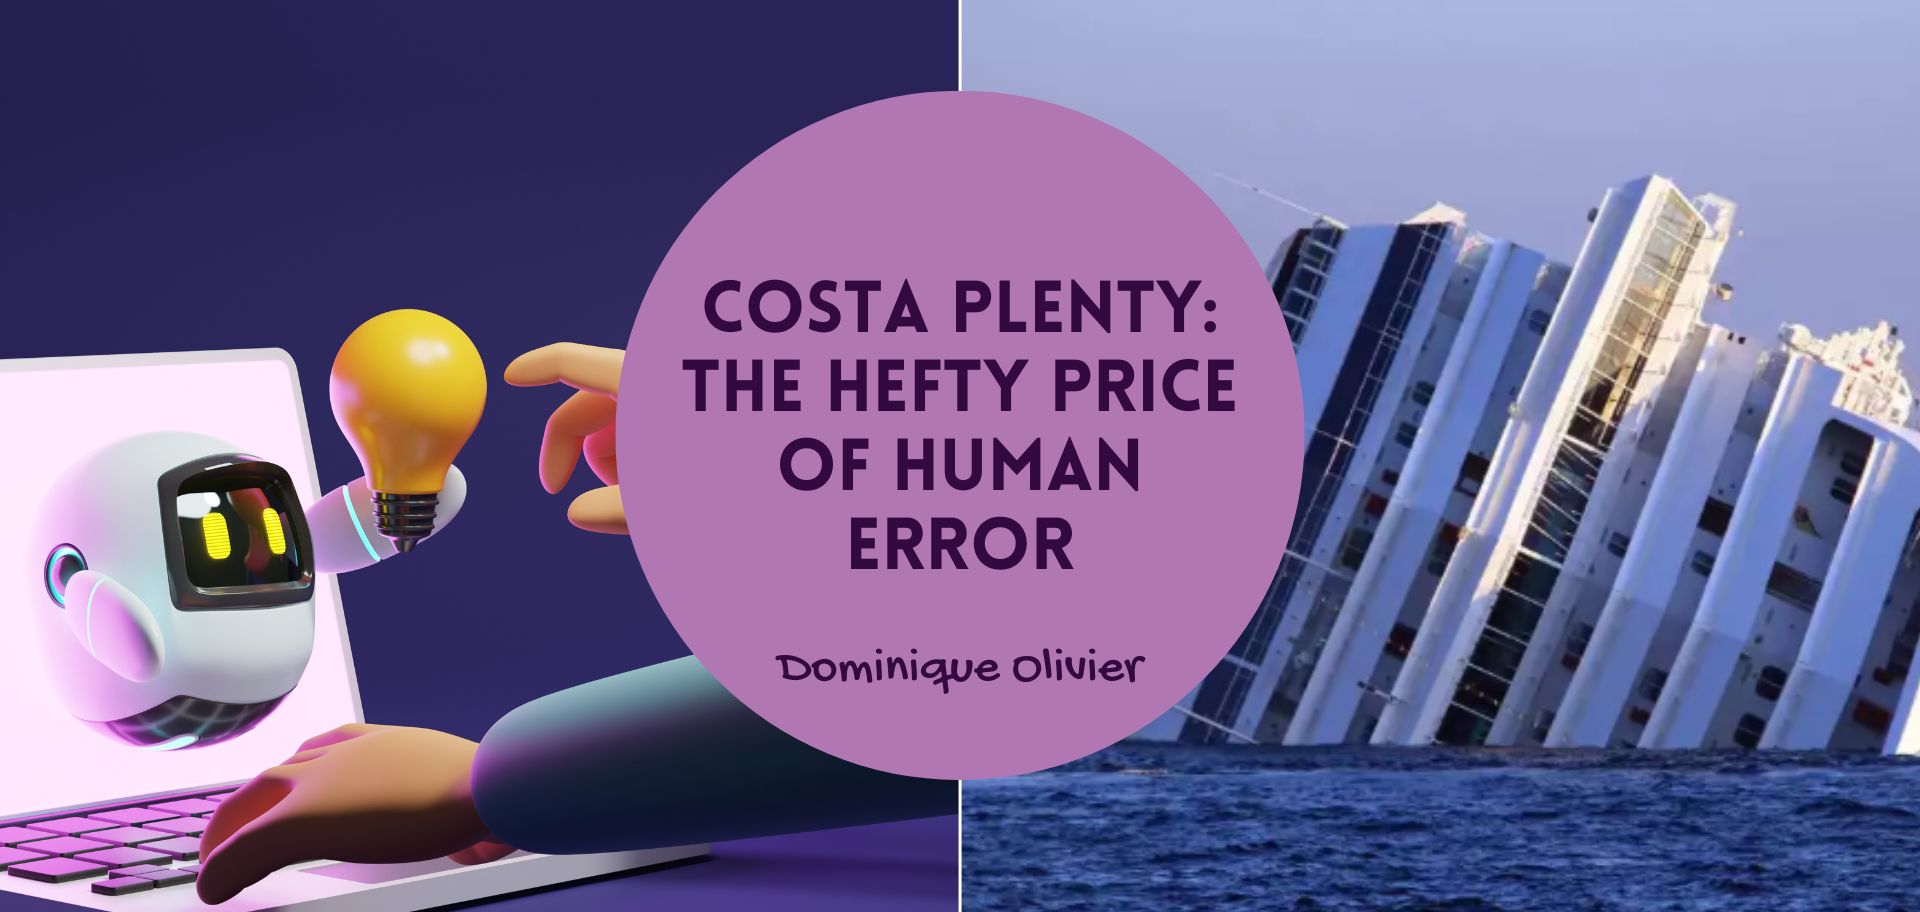 Costa plenty: the hefty price of human error